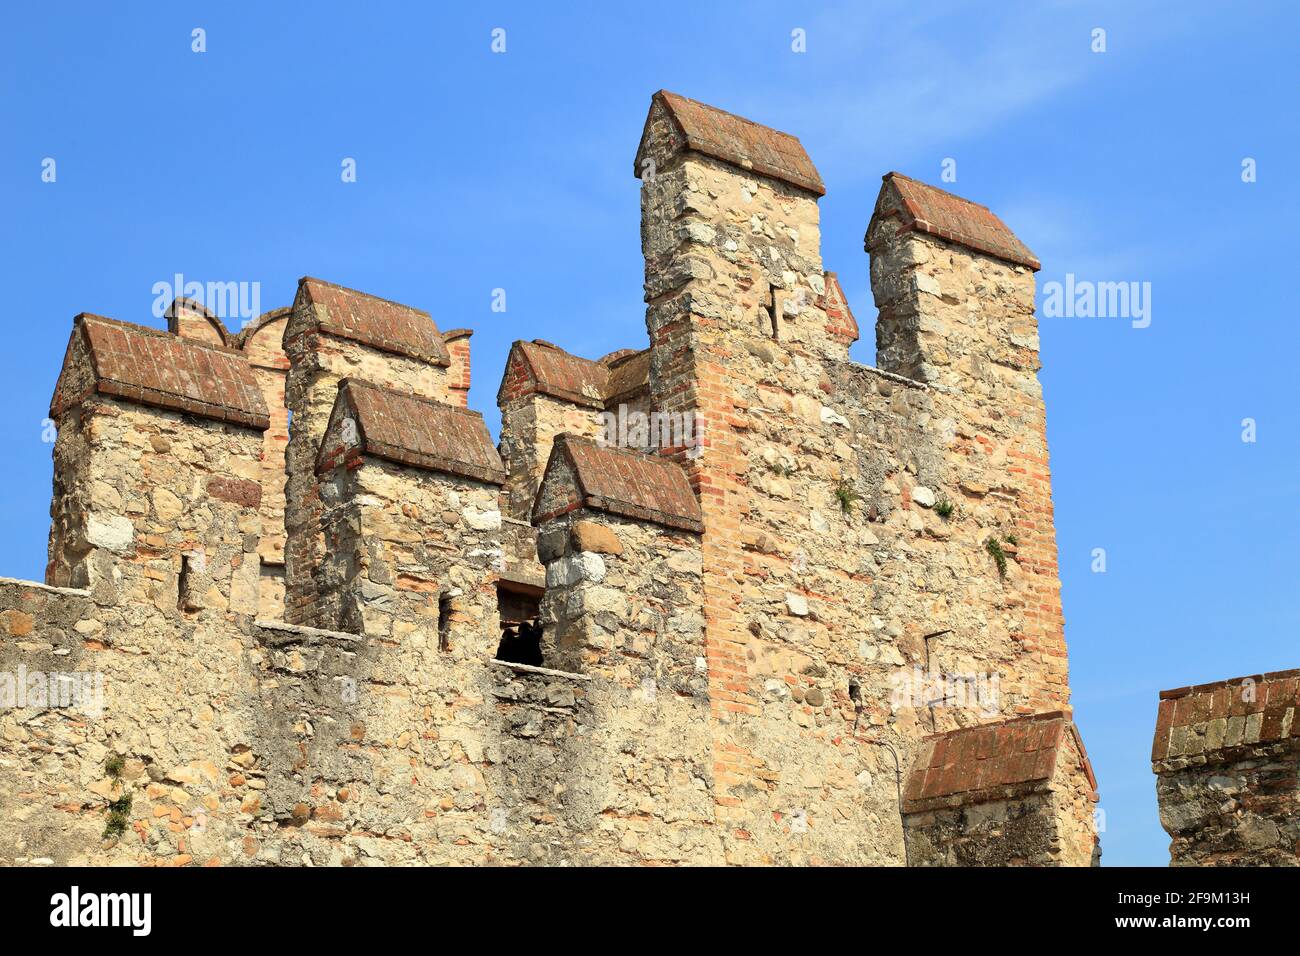 Castillo de Sirmione / Castello Scaligero. Lago de Garda, Lago di Garda, Gardasee, Italia Foto de stock